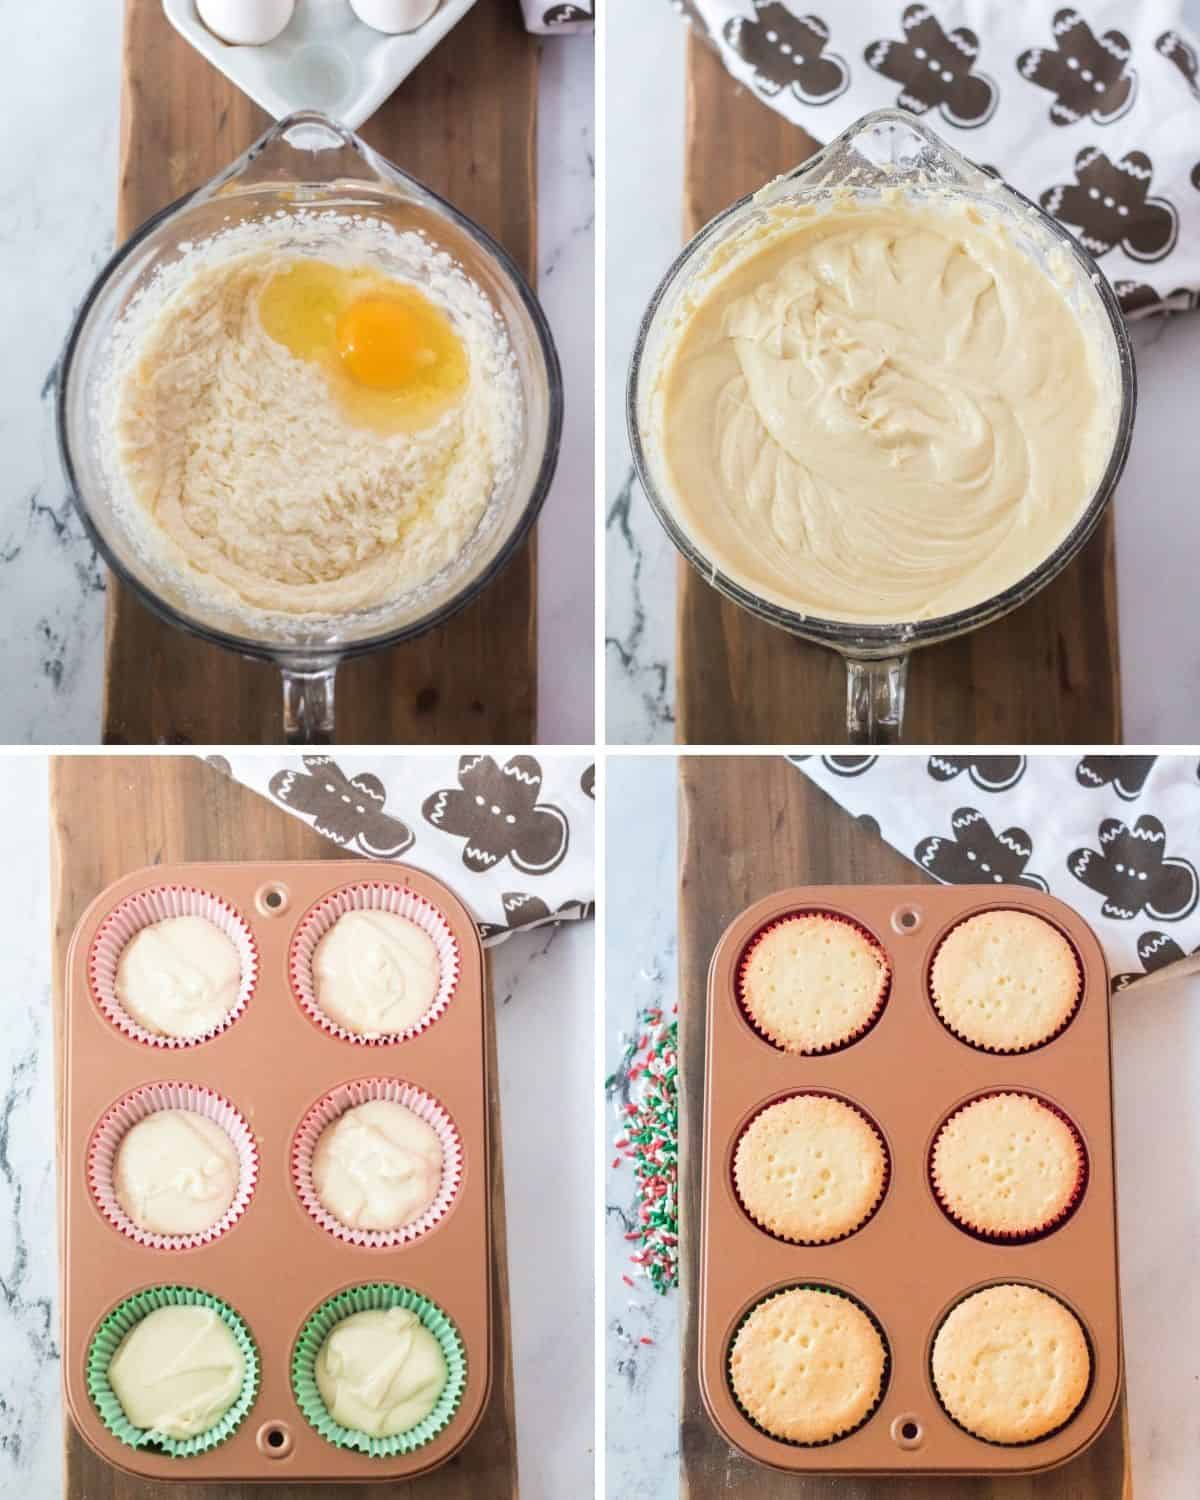 Steps to make Buddy the Elf cupcakes.